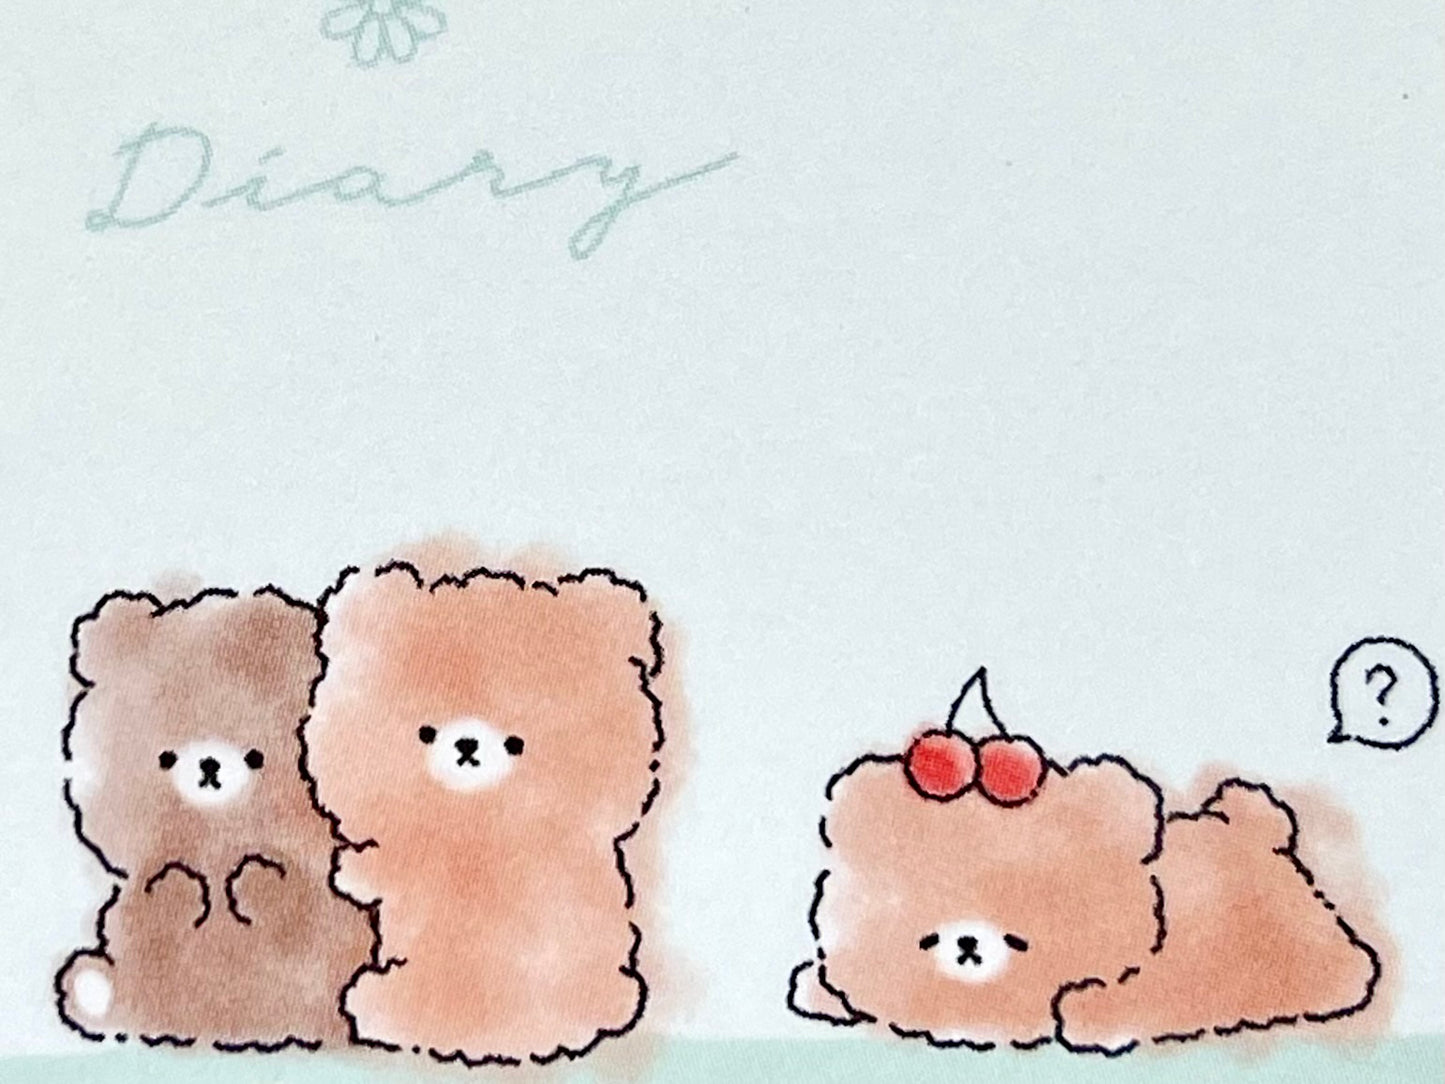 112669 Kuma Kuma Bear Diary Mini Notepad-10